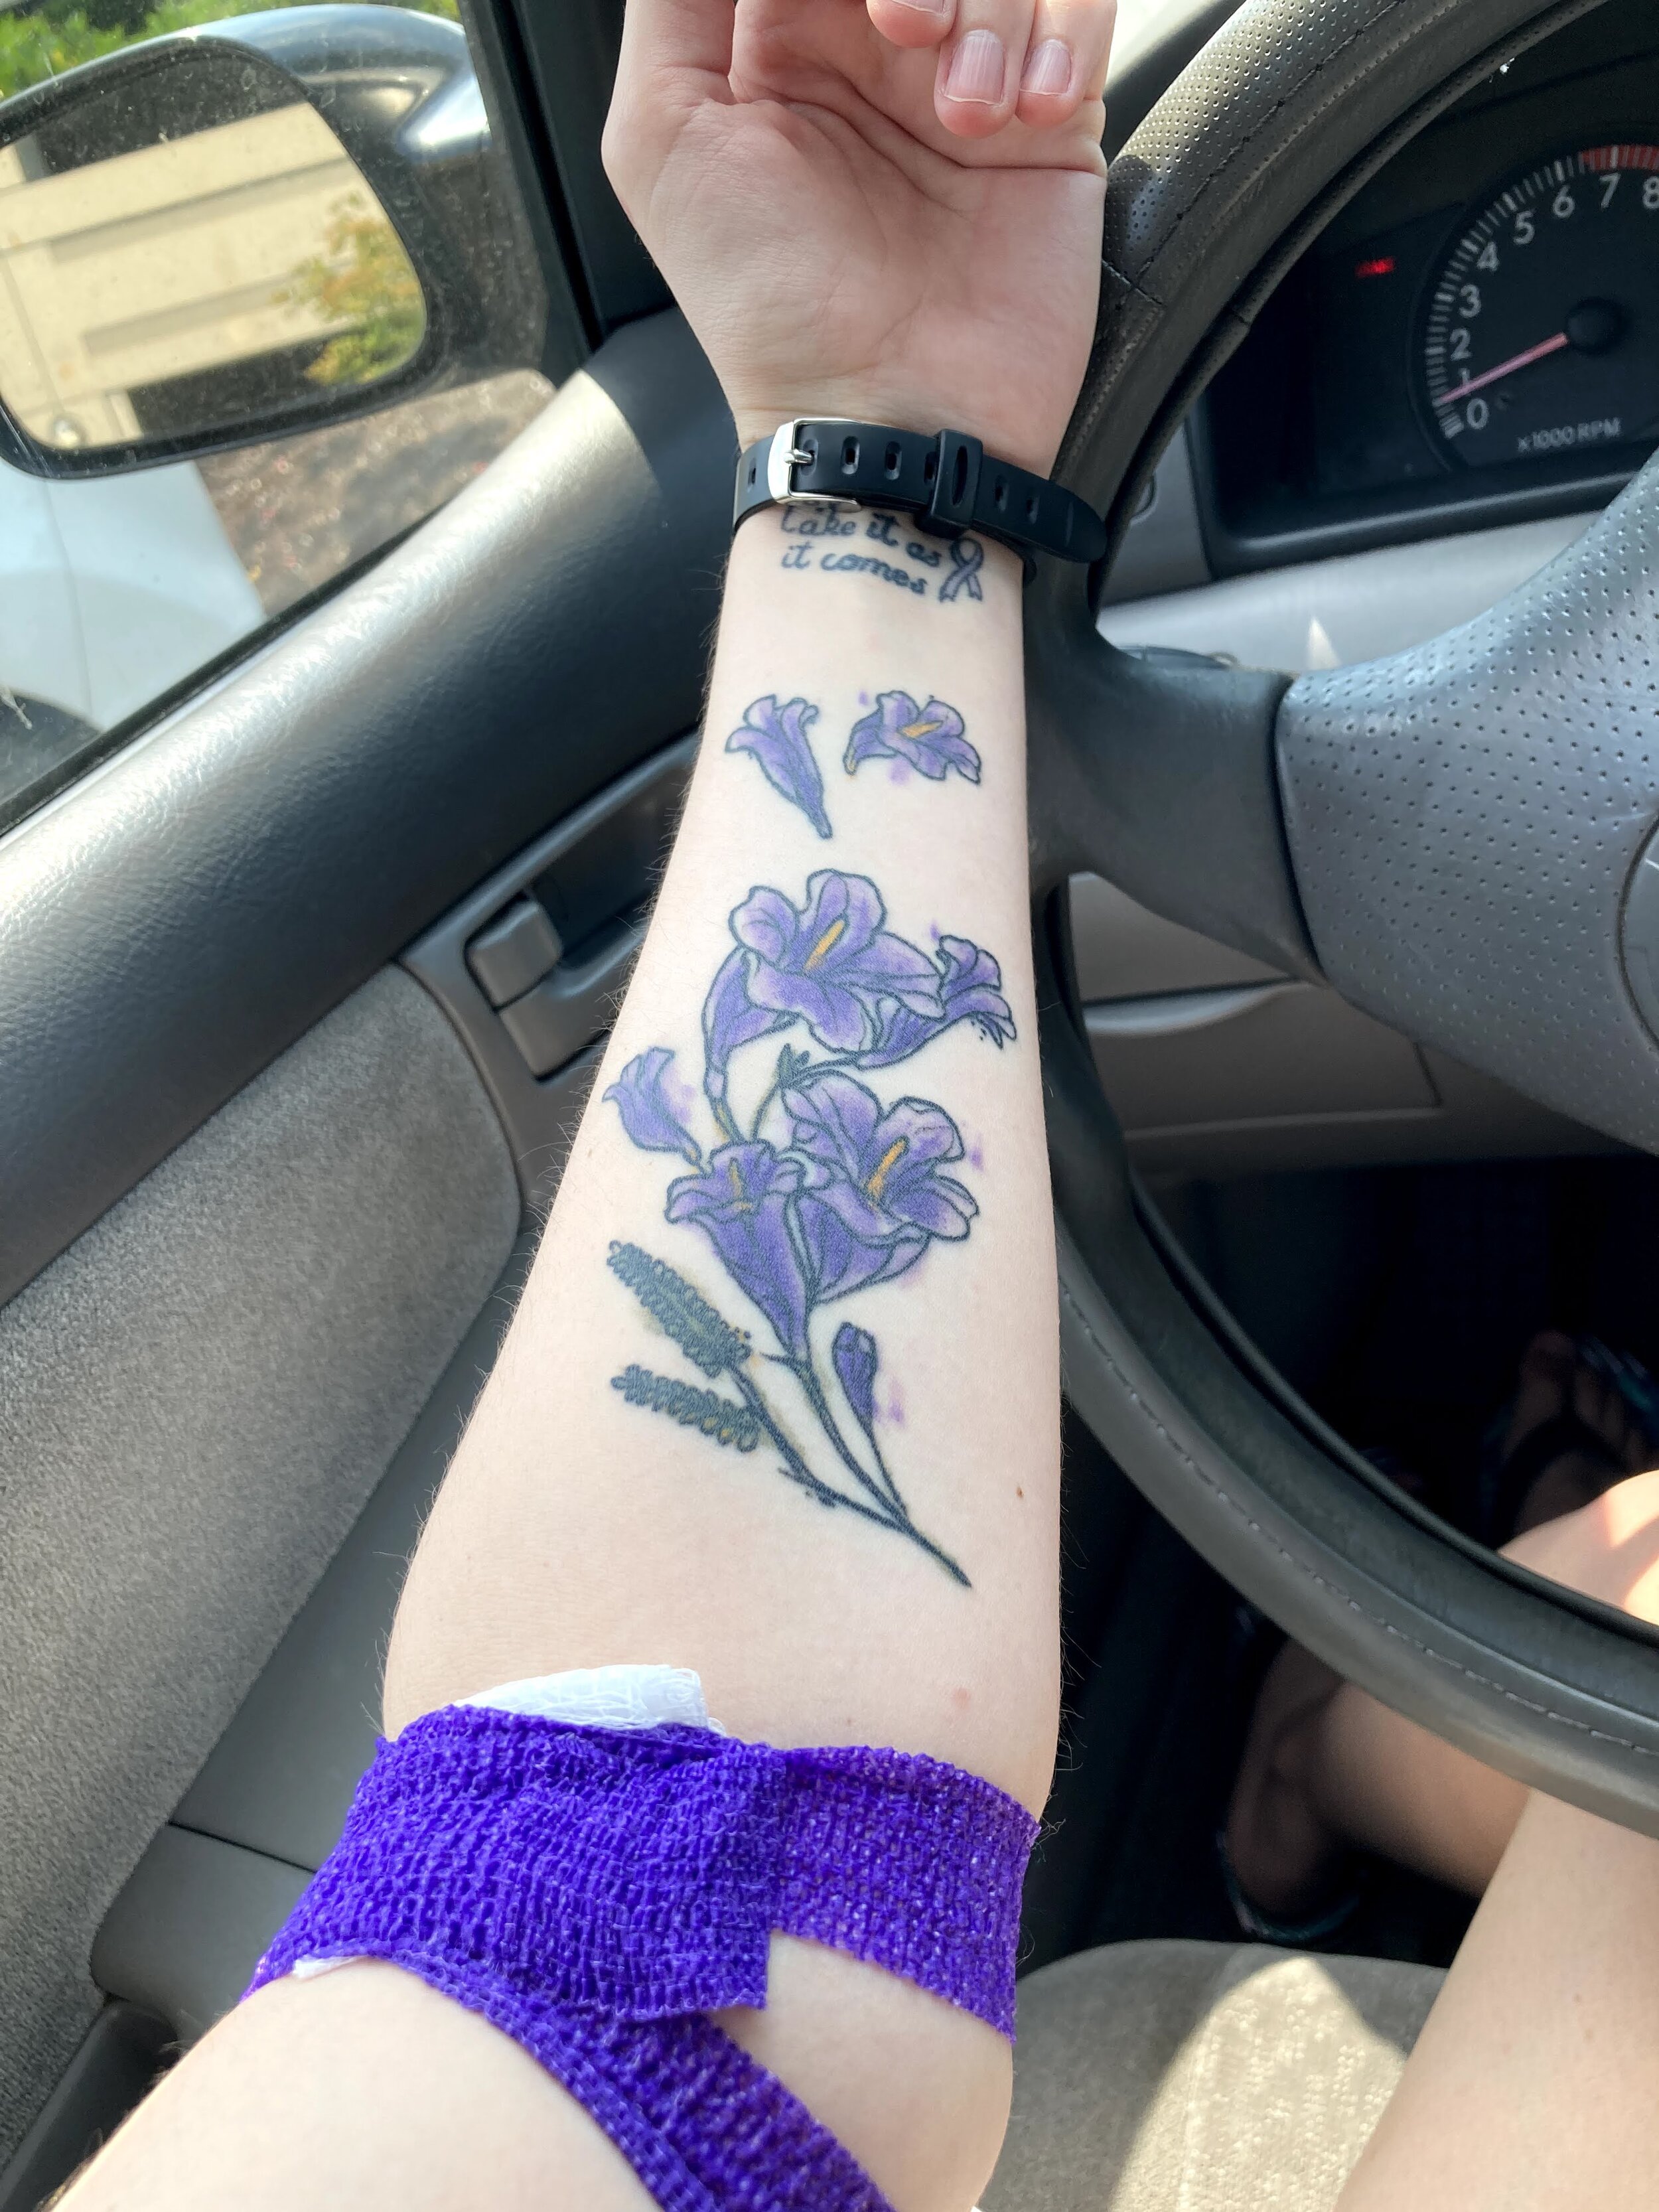 Lizzie’s beautiful Jacaranda flowers tattoo.